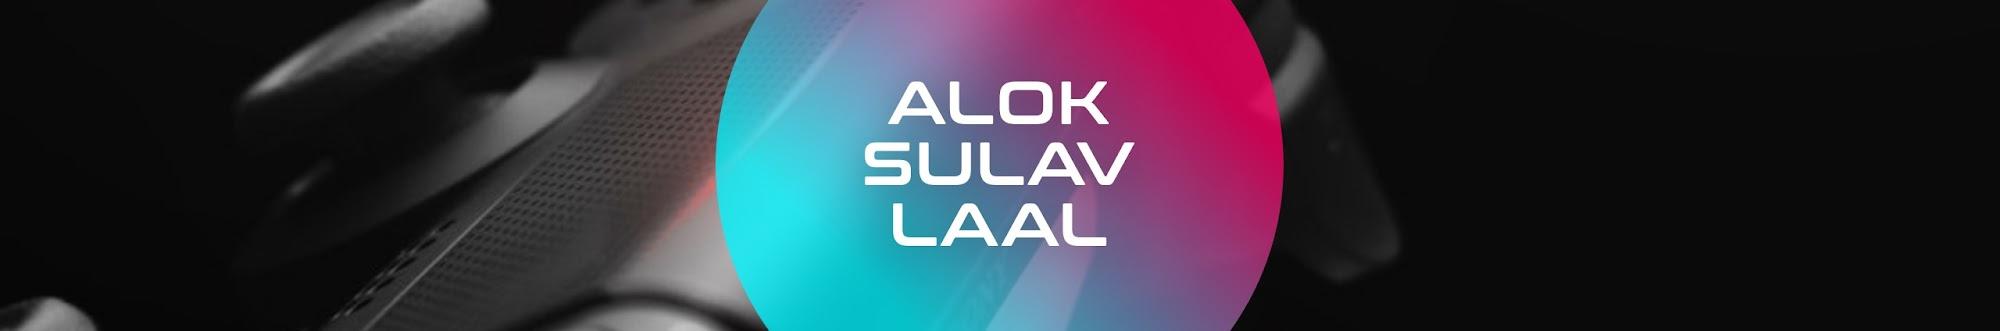 Alok Sulav Laal